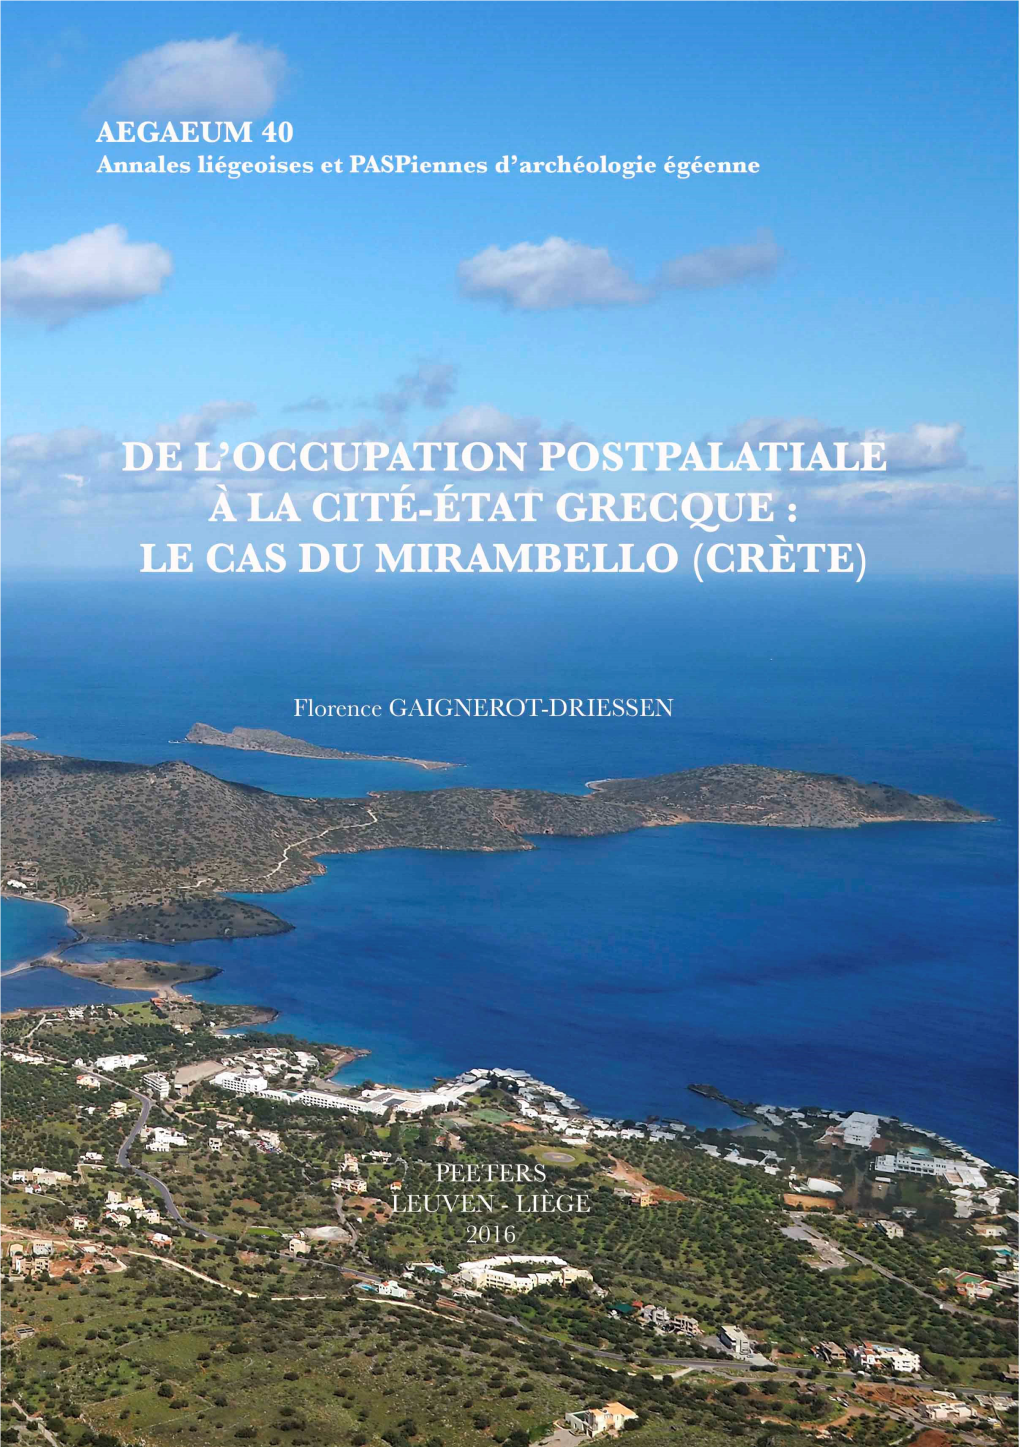 De L'occupation Postpalatiale a La Cite-Etat Grecque